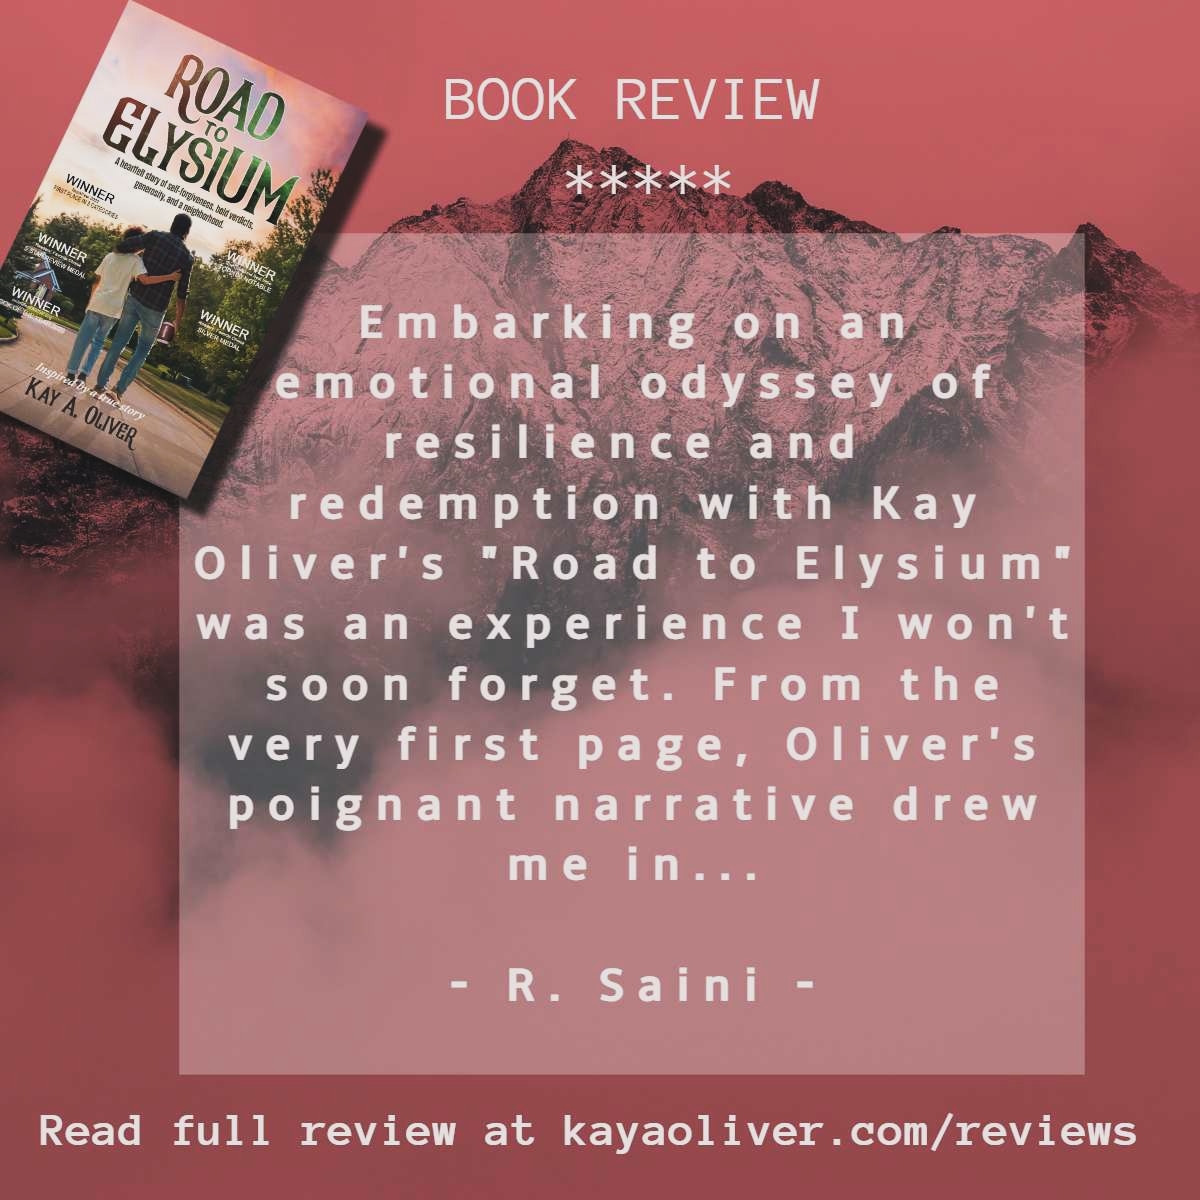 @writingoutlook Read more at 
kayaoliver.com/reviews 
#readnow #readmorebooks #ku #kindleunlimited